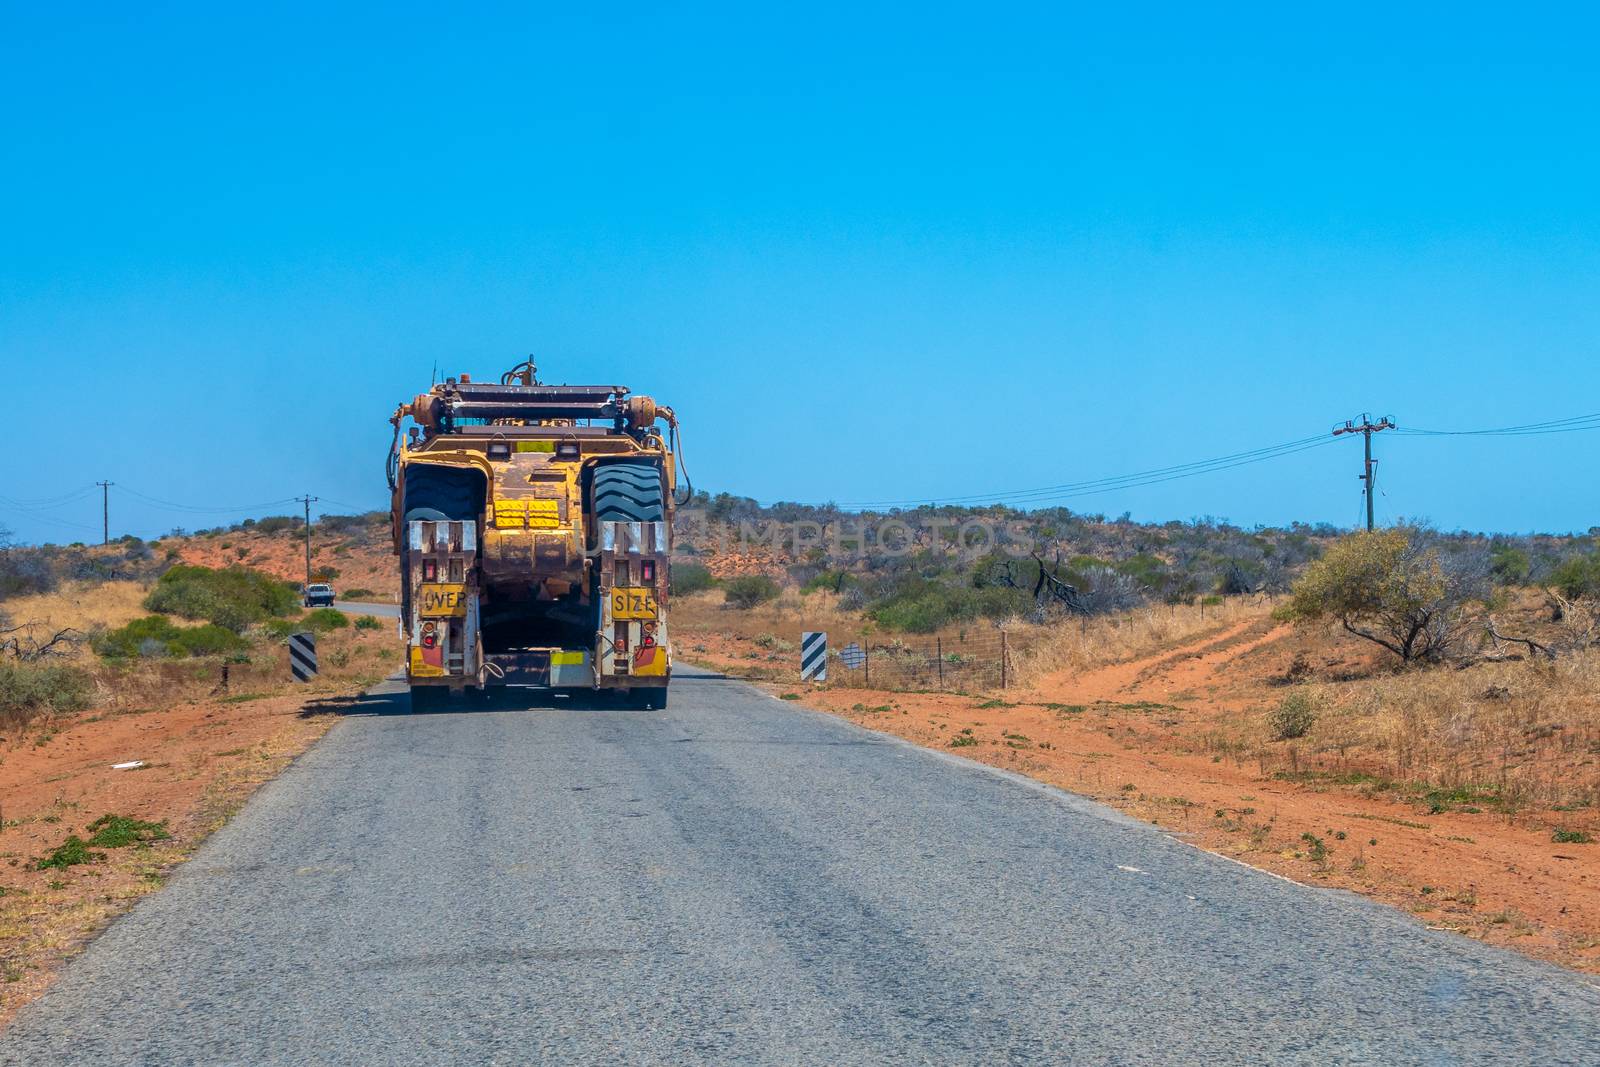 Road Train oversize transport in Australia transporting big mining equipment by MXW_Stock